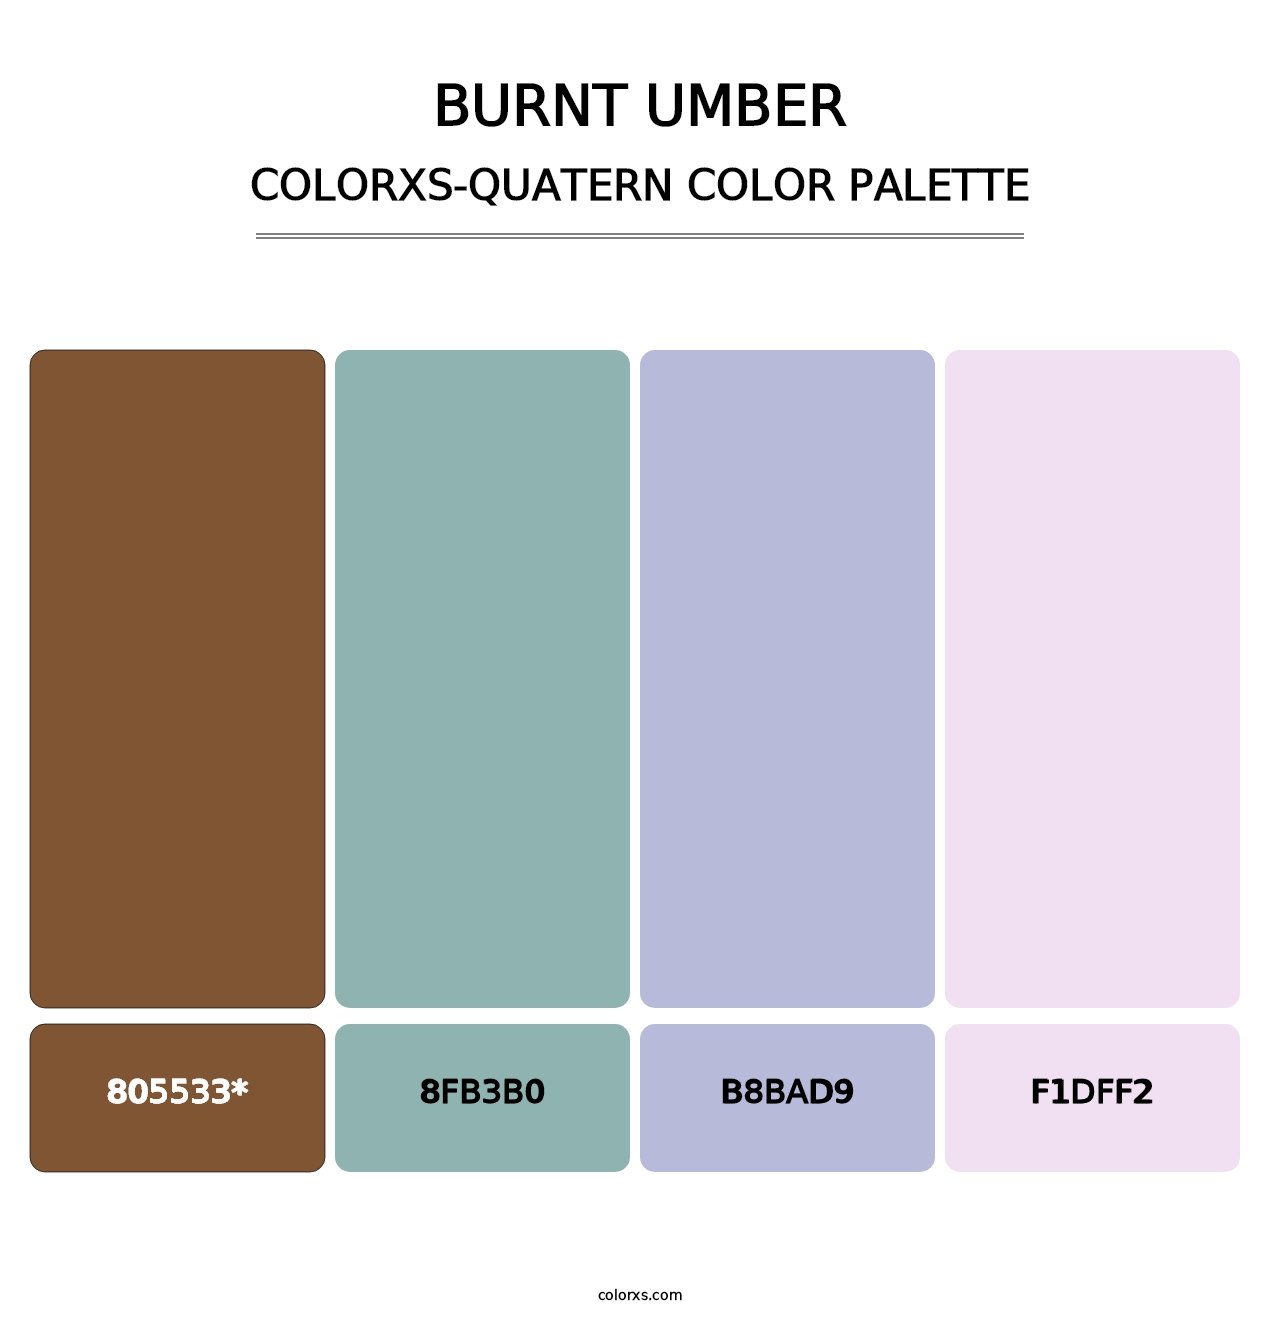 Burnt Umber - Colorxs Quatern Palette